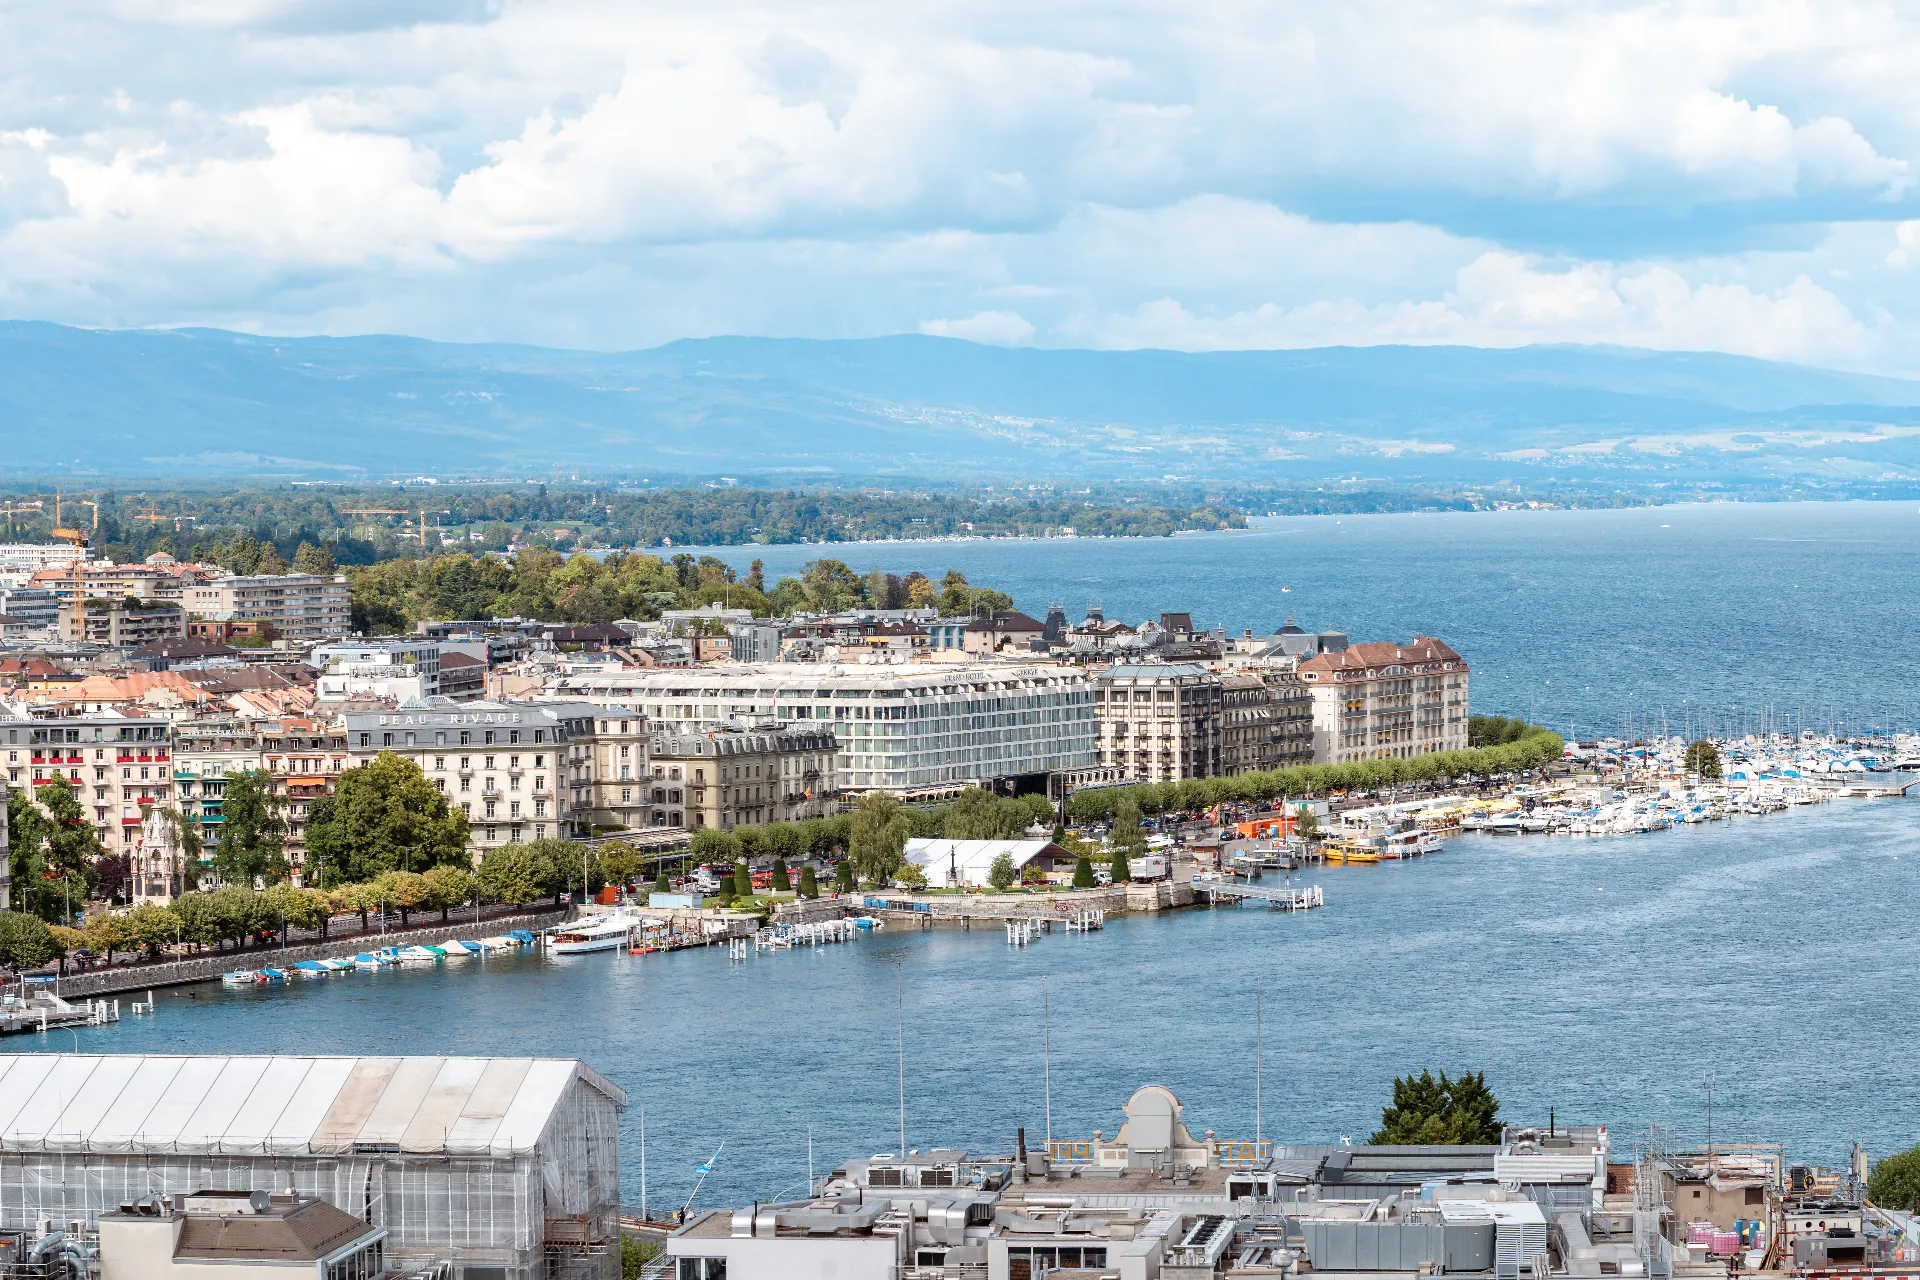 High view of Geneva's city center